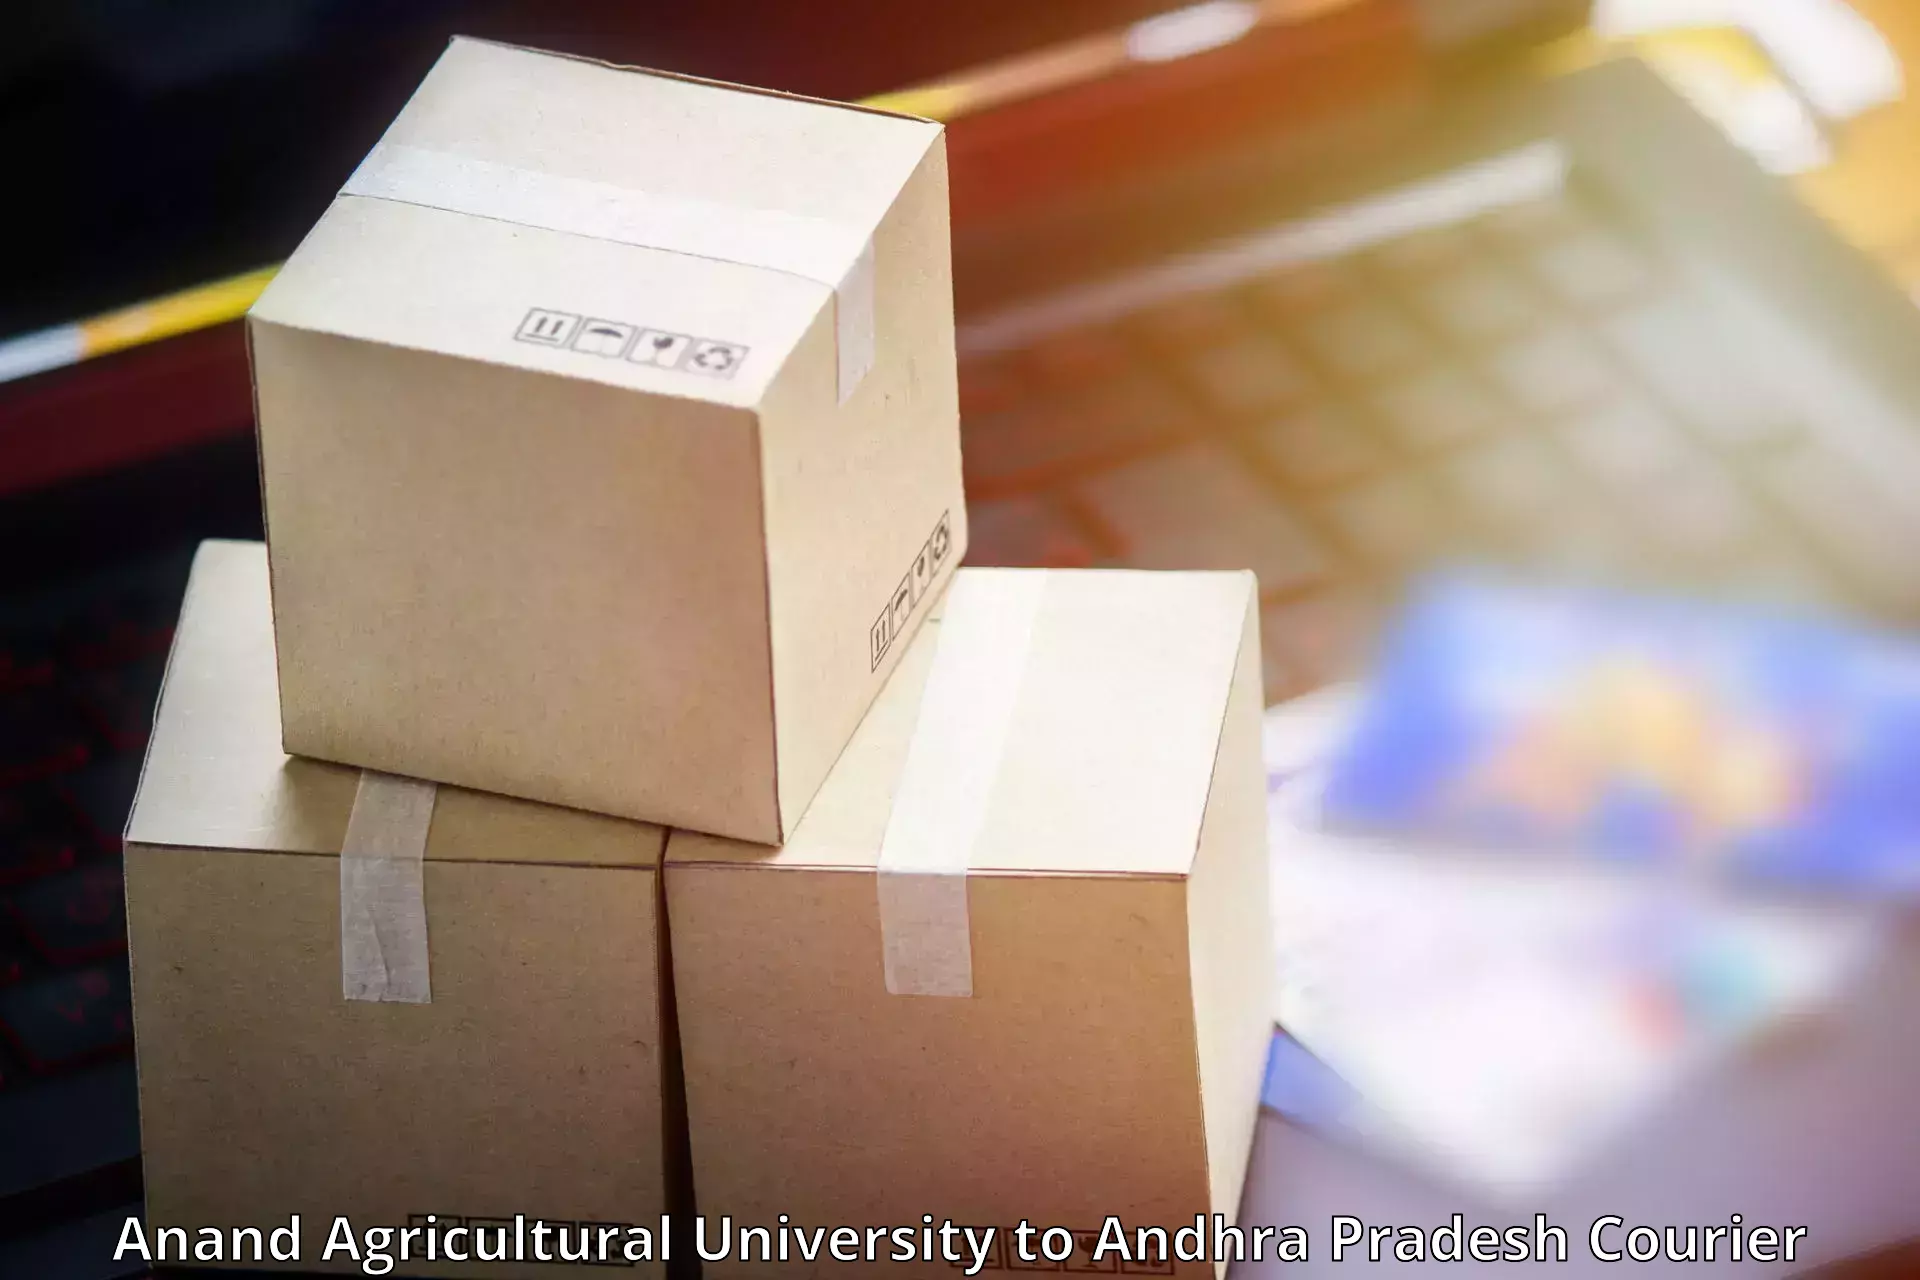 Courier service innovation Anand Agricultural University to Sri Venkateswara Institute of Medical Sciences Tirupati